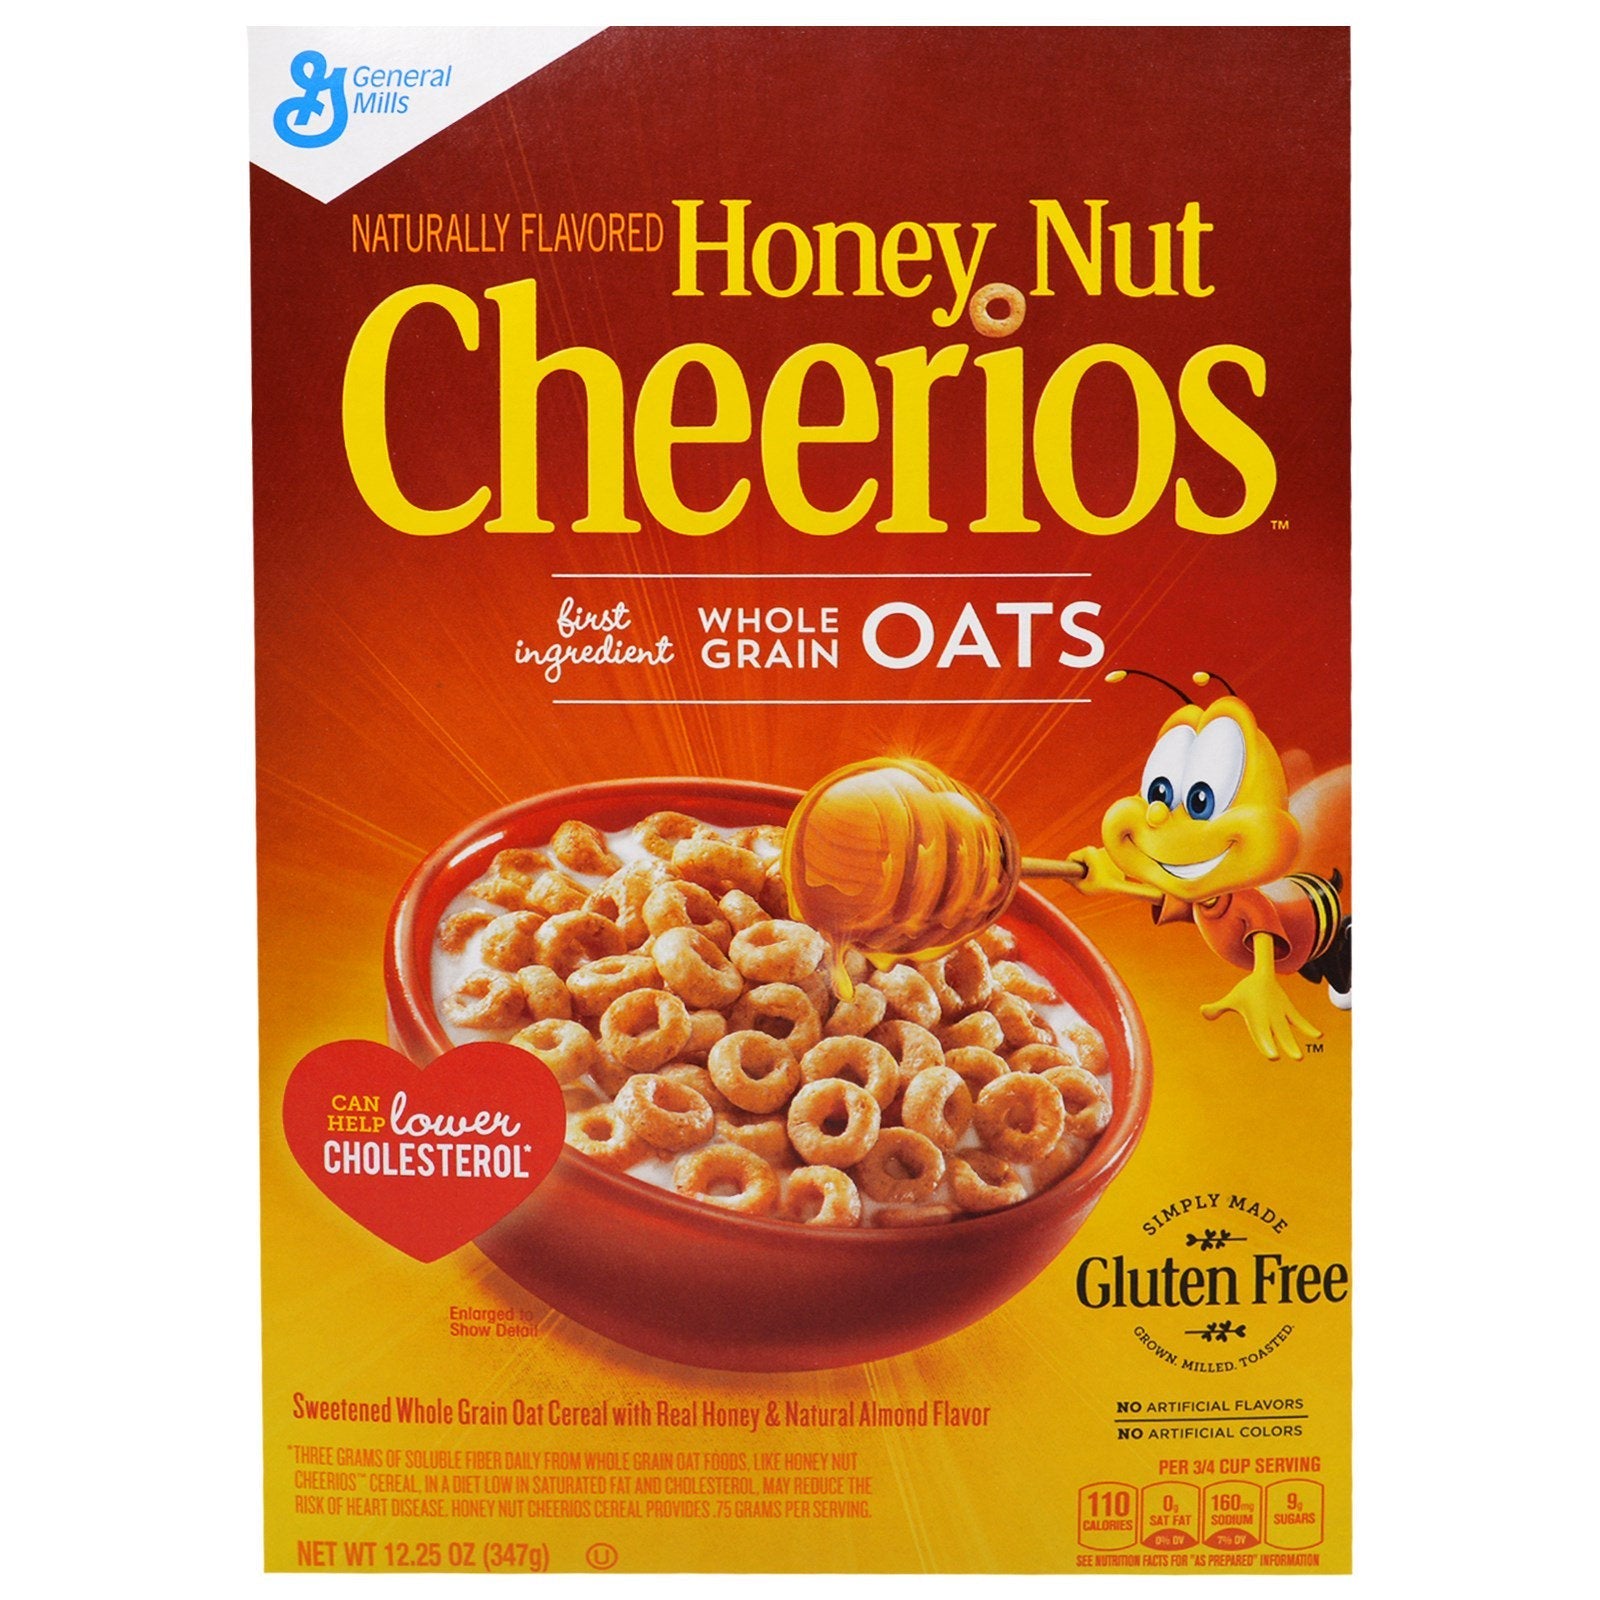 stl>Honey Nut Cheerios - 1 box